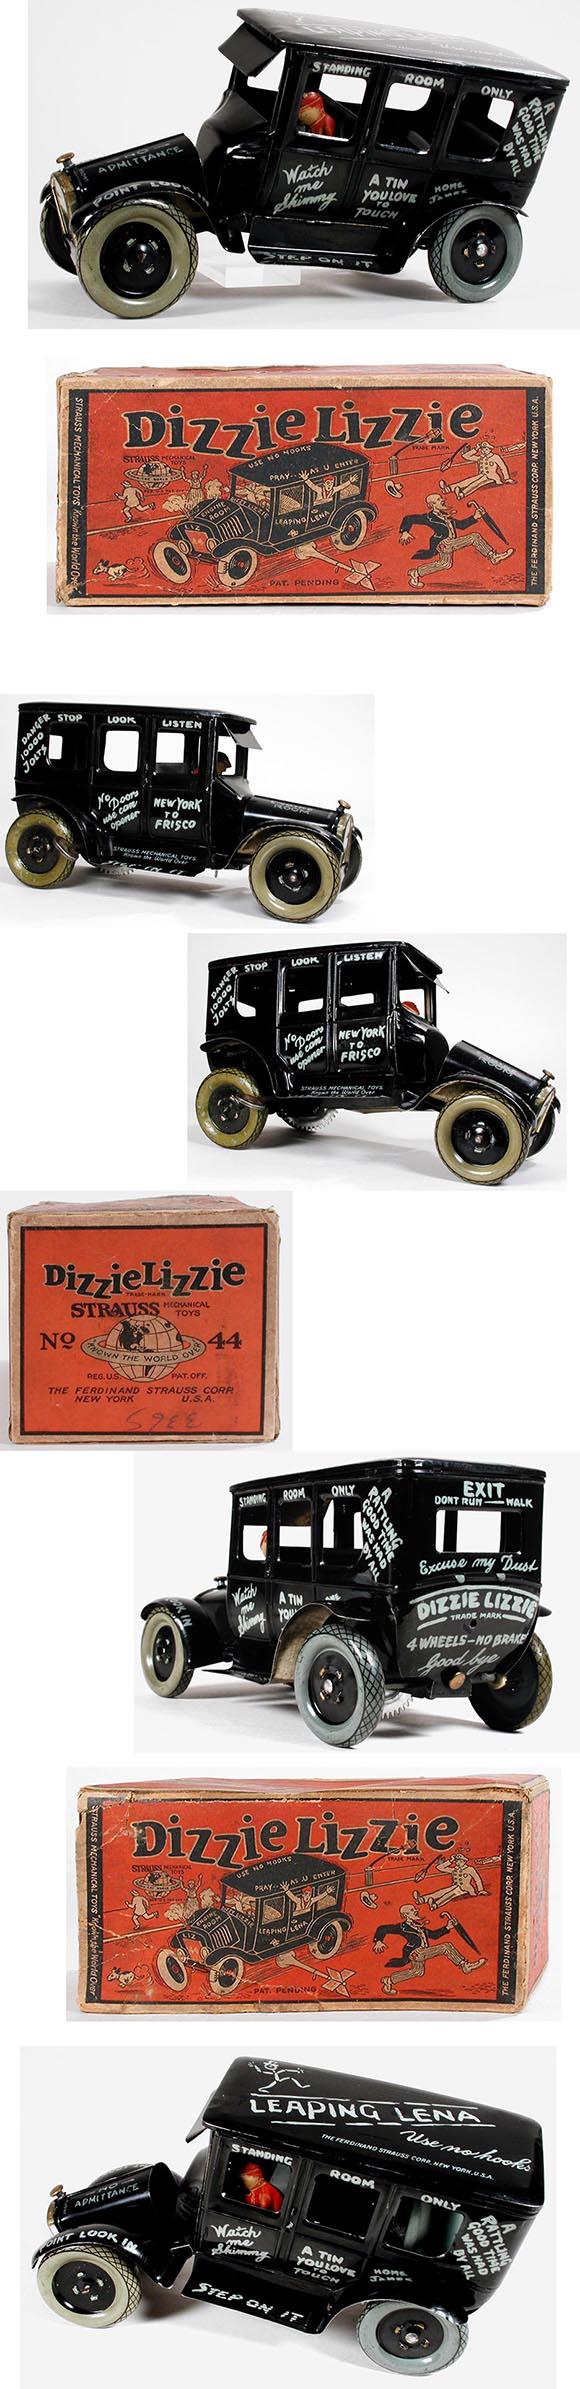 1925 Strauss, Dizzie Lizzie Automobile in Original Box